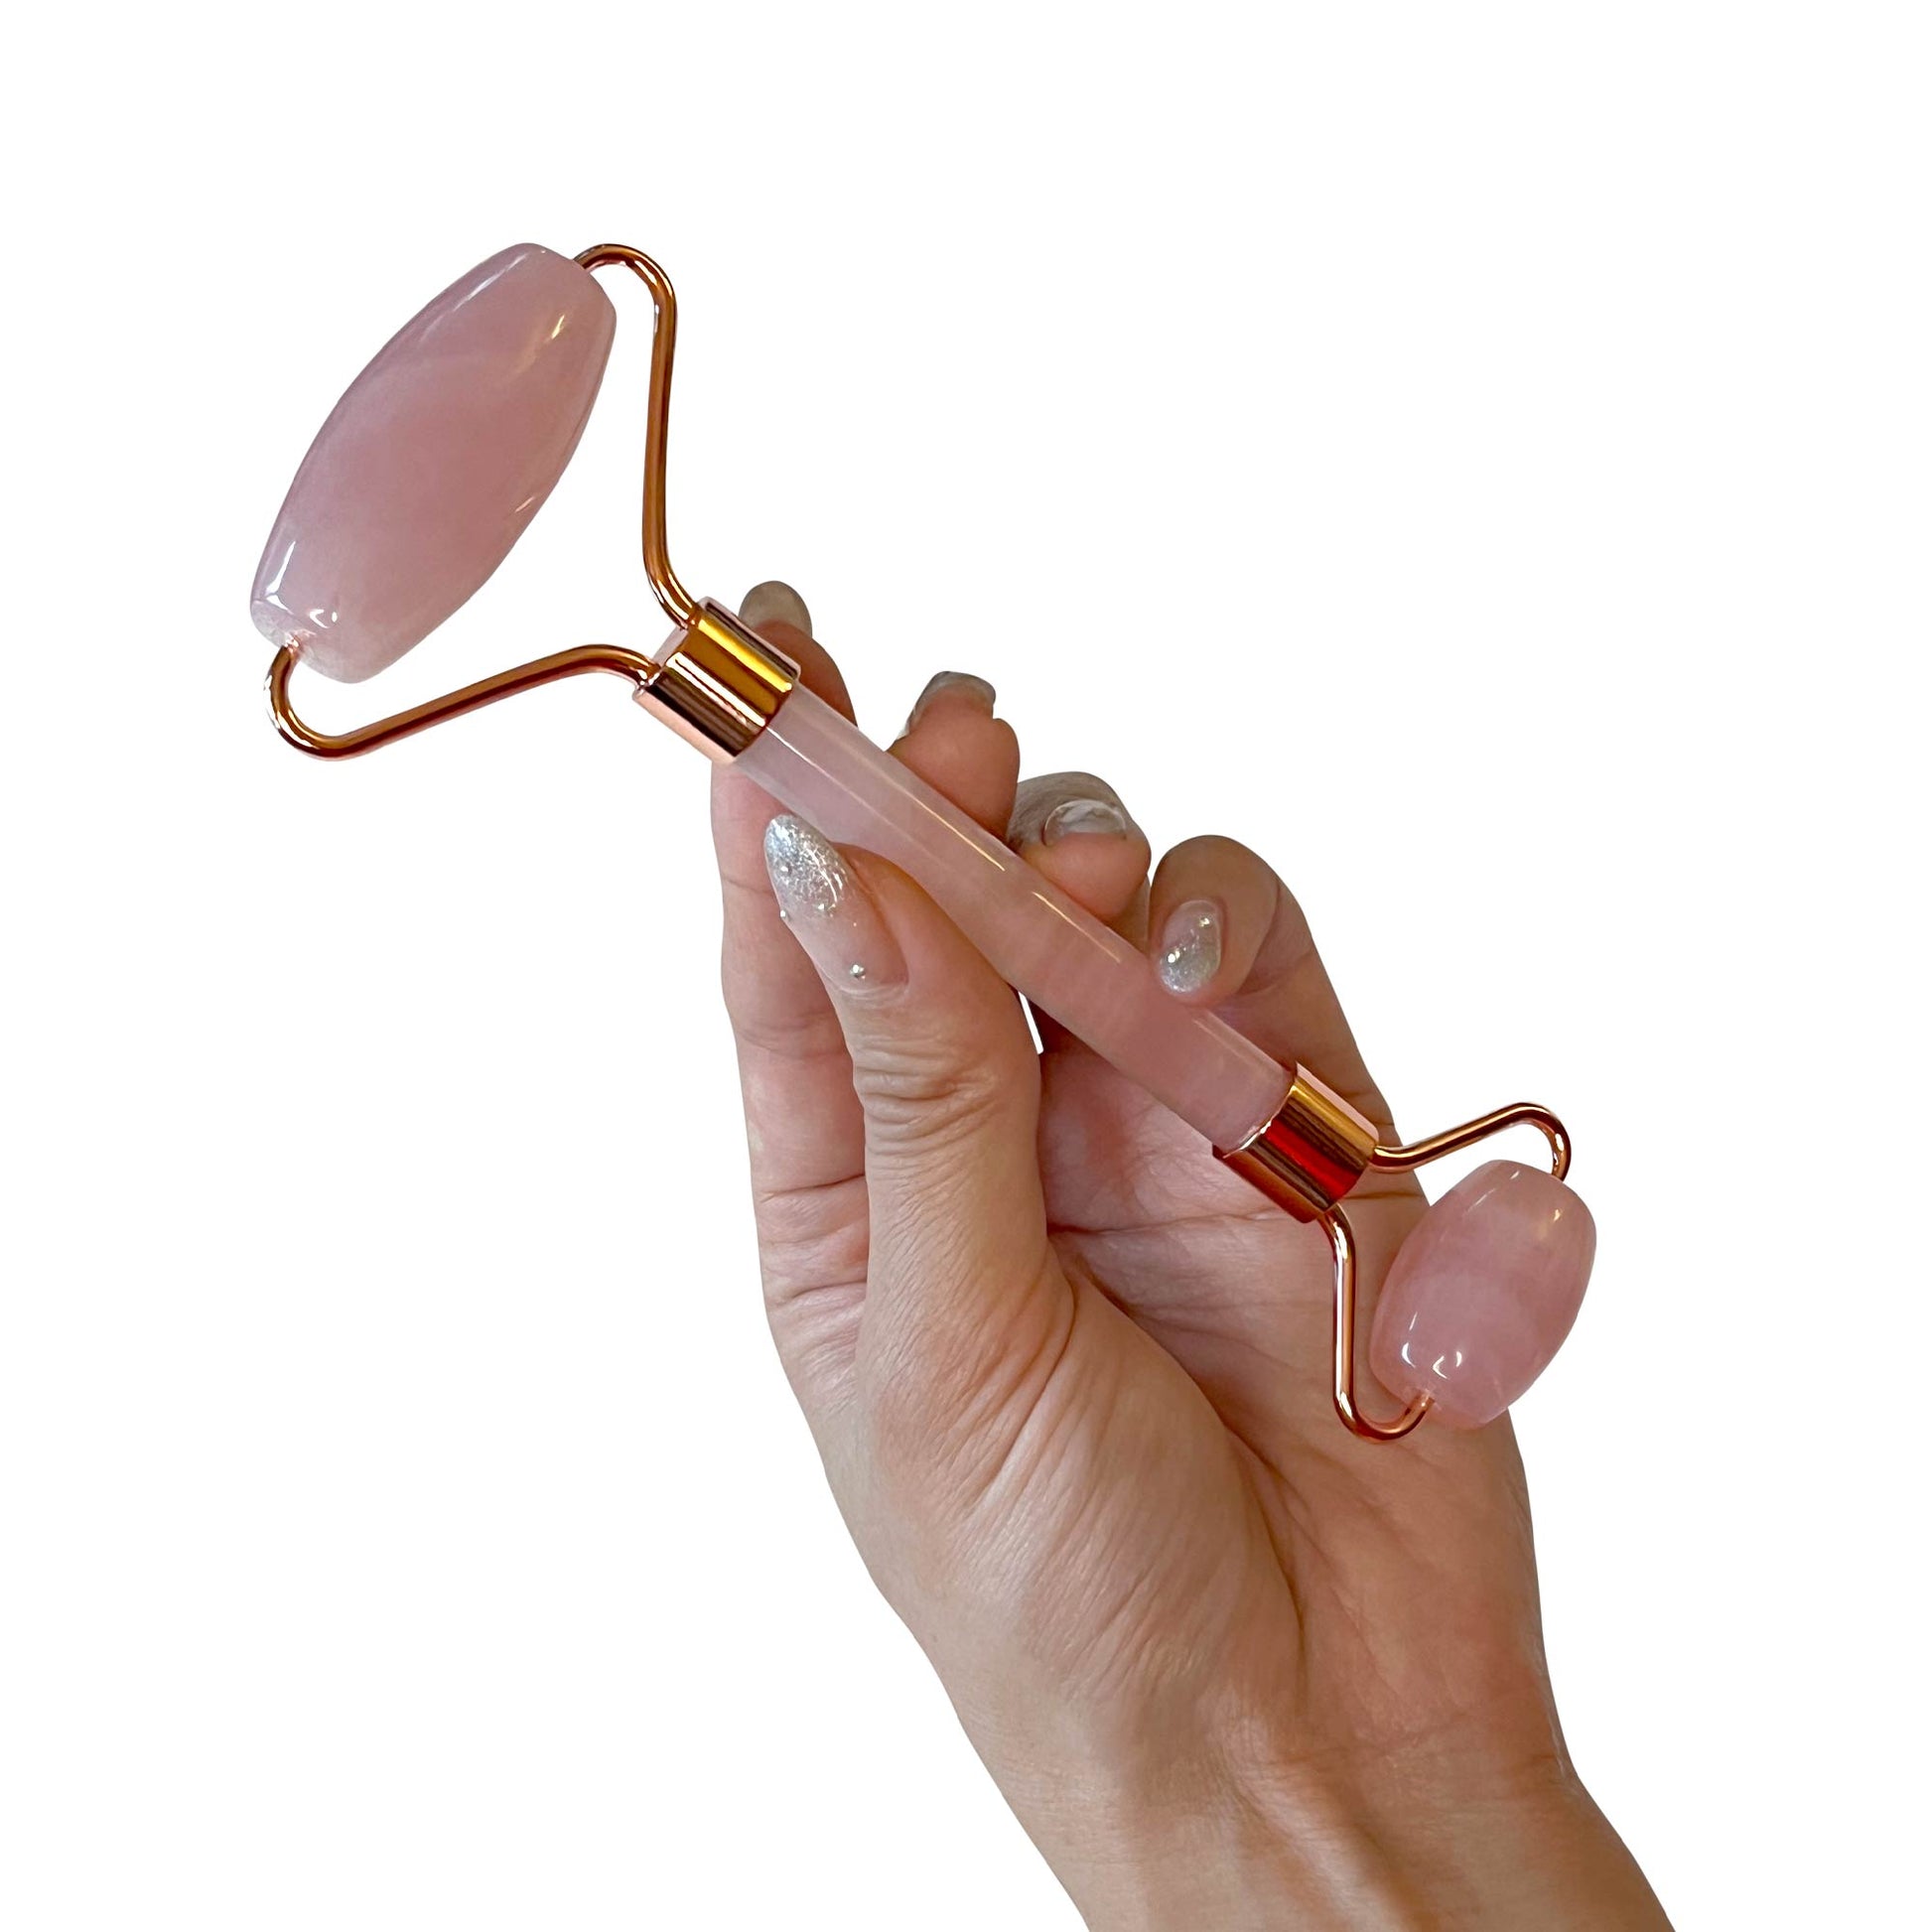 Hand holding a rose quartz roller